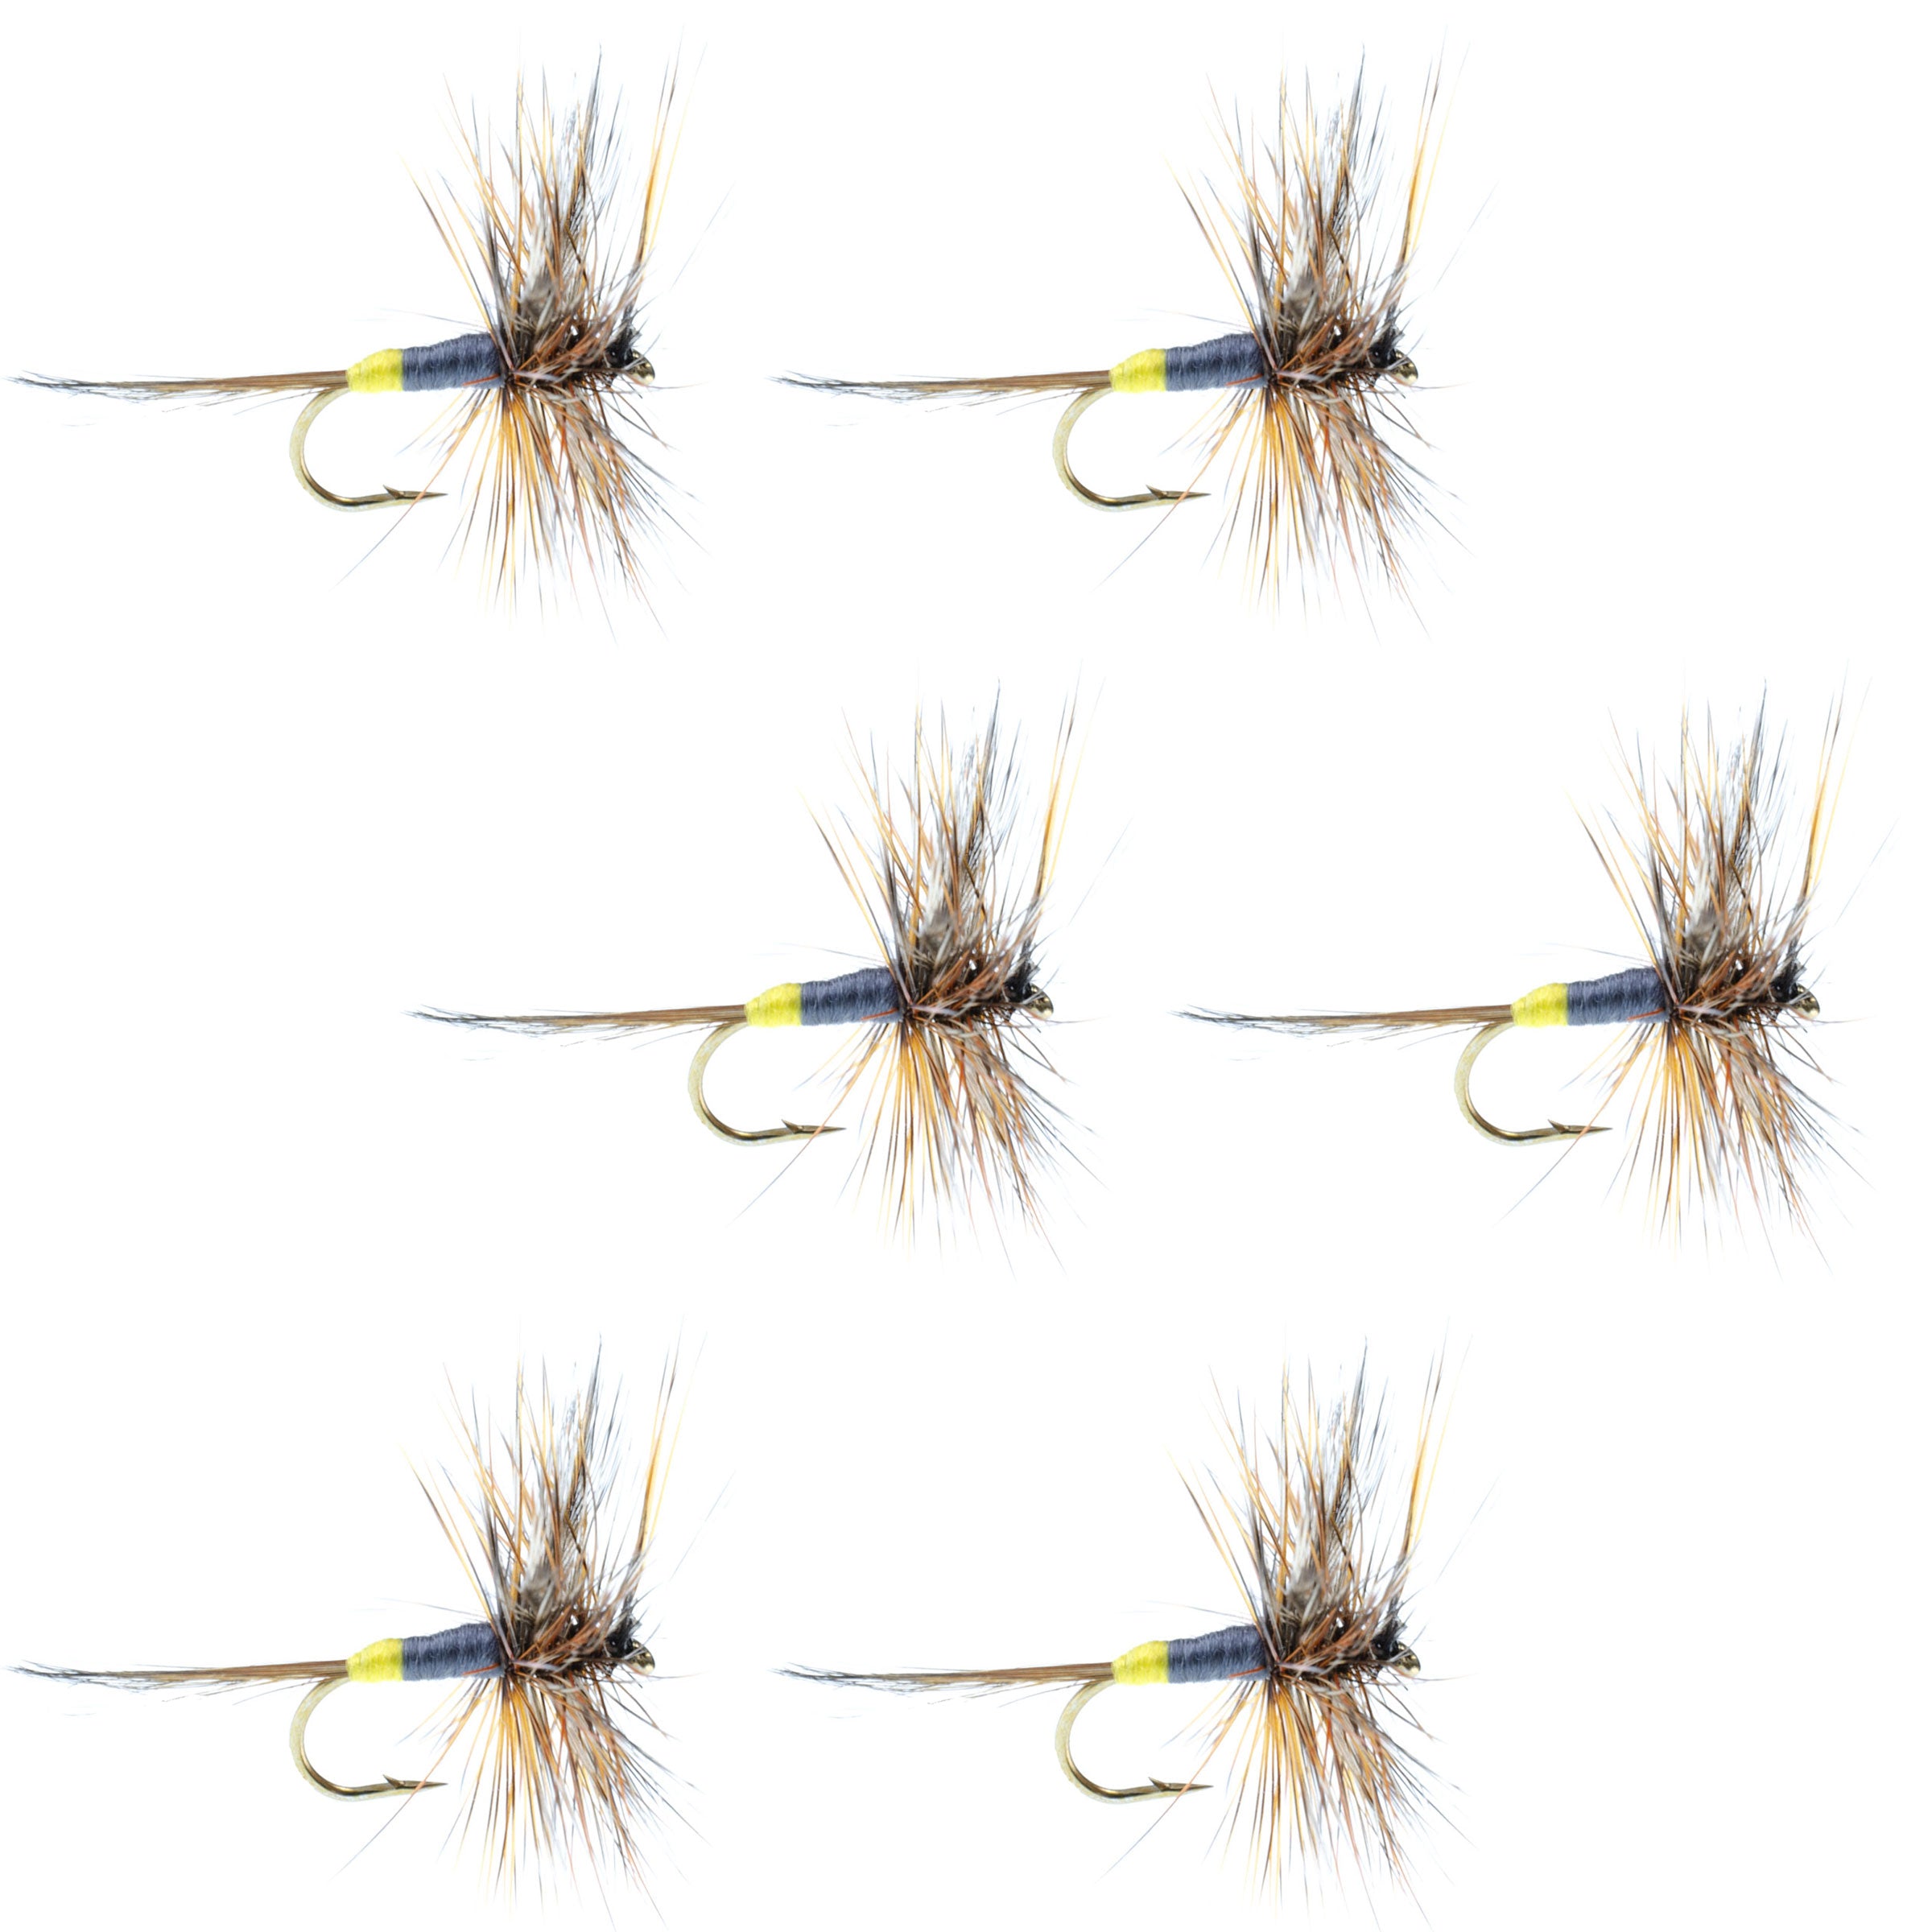 Adams Female Classic Dry Fly - 6 Flies - Hook Size 12